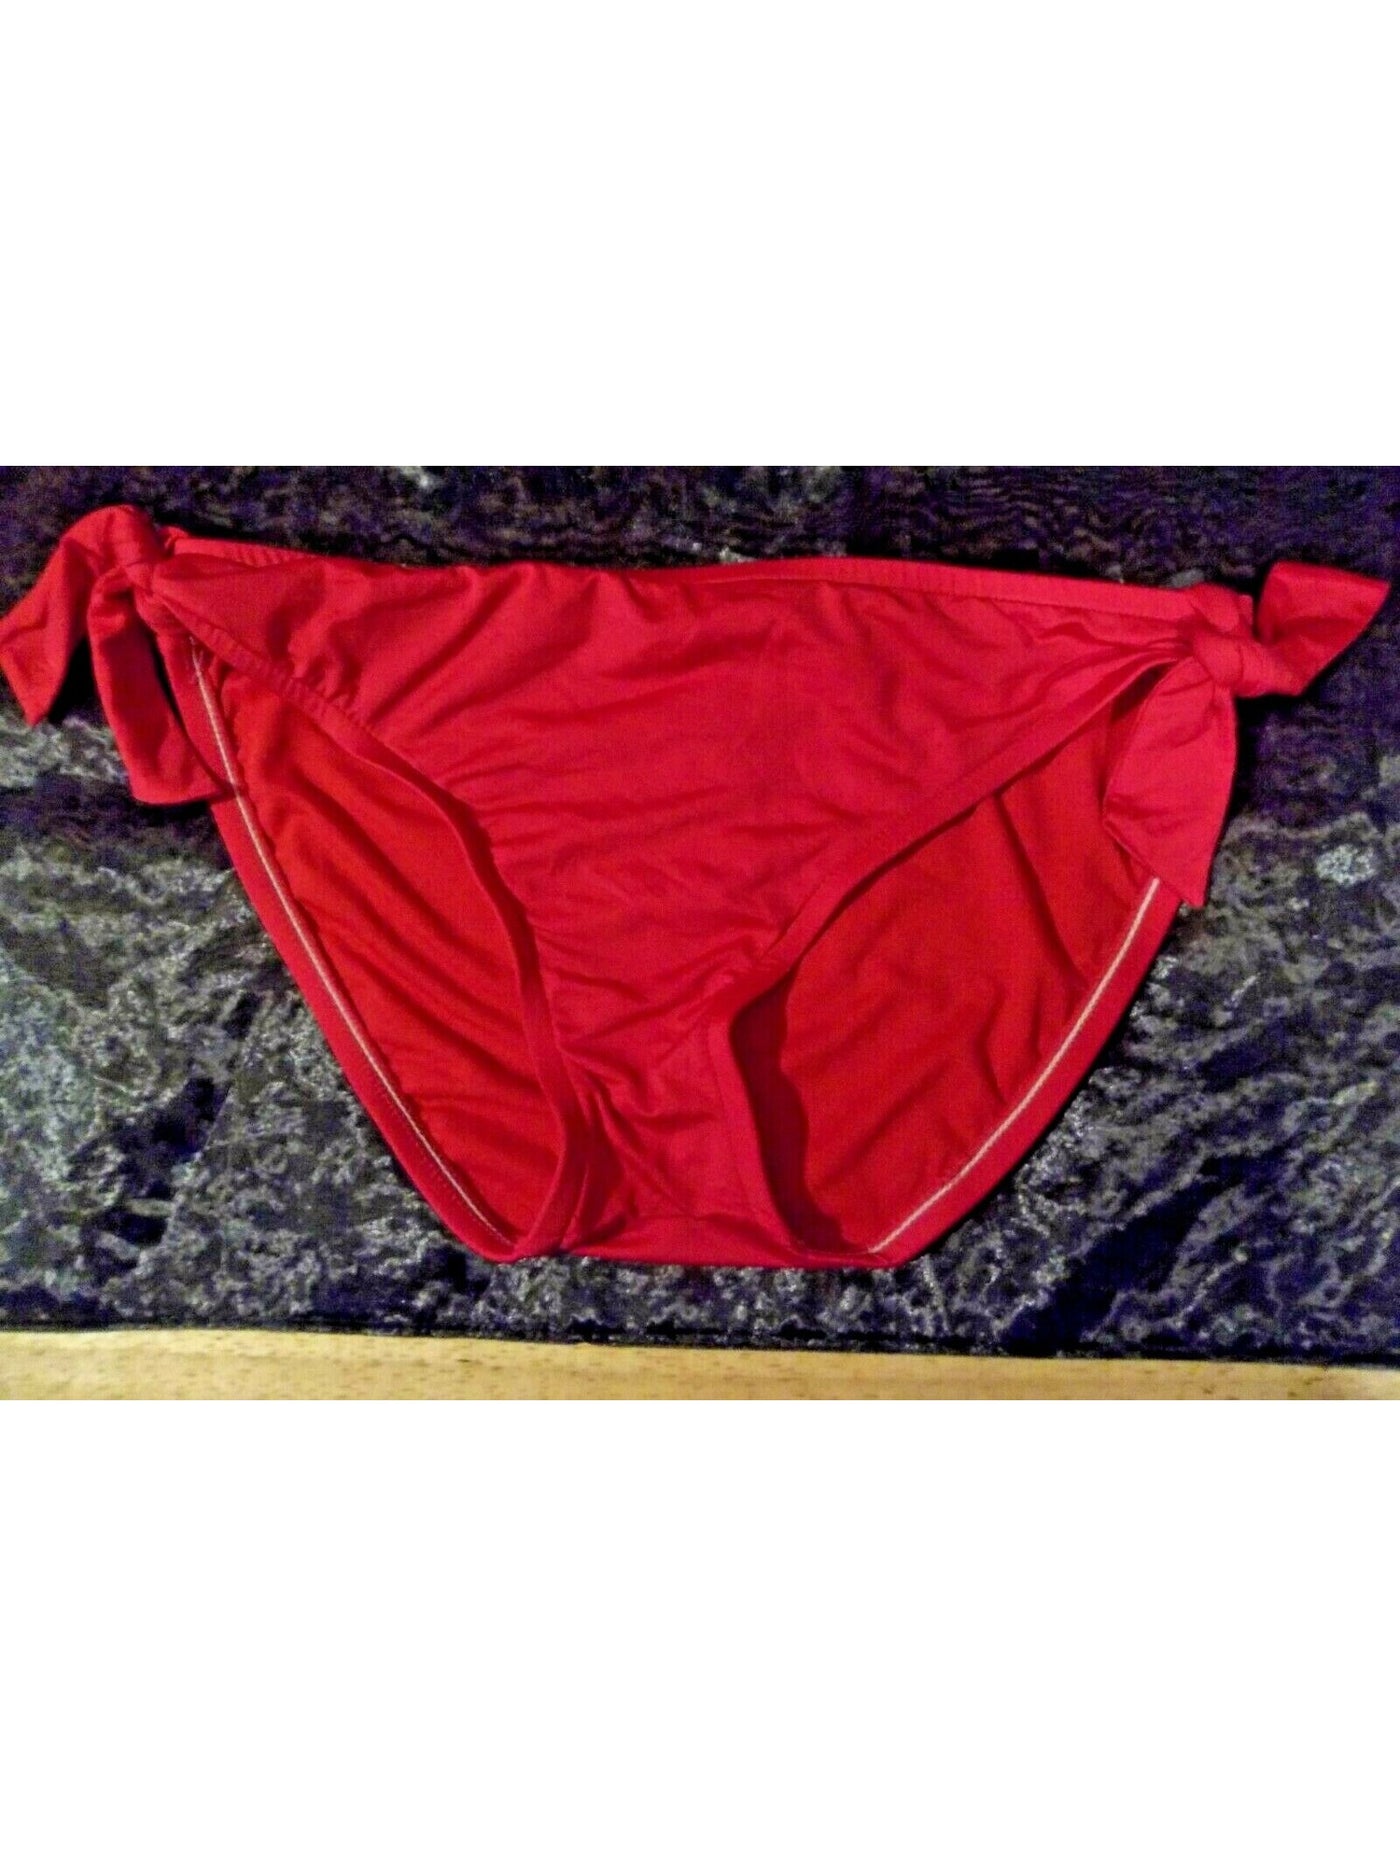 MOSSIMO SUPPLY CO. Women's Pink Bikini Bottom S